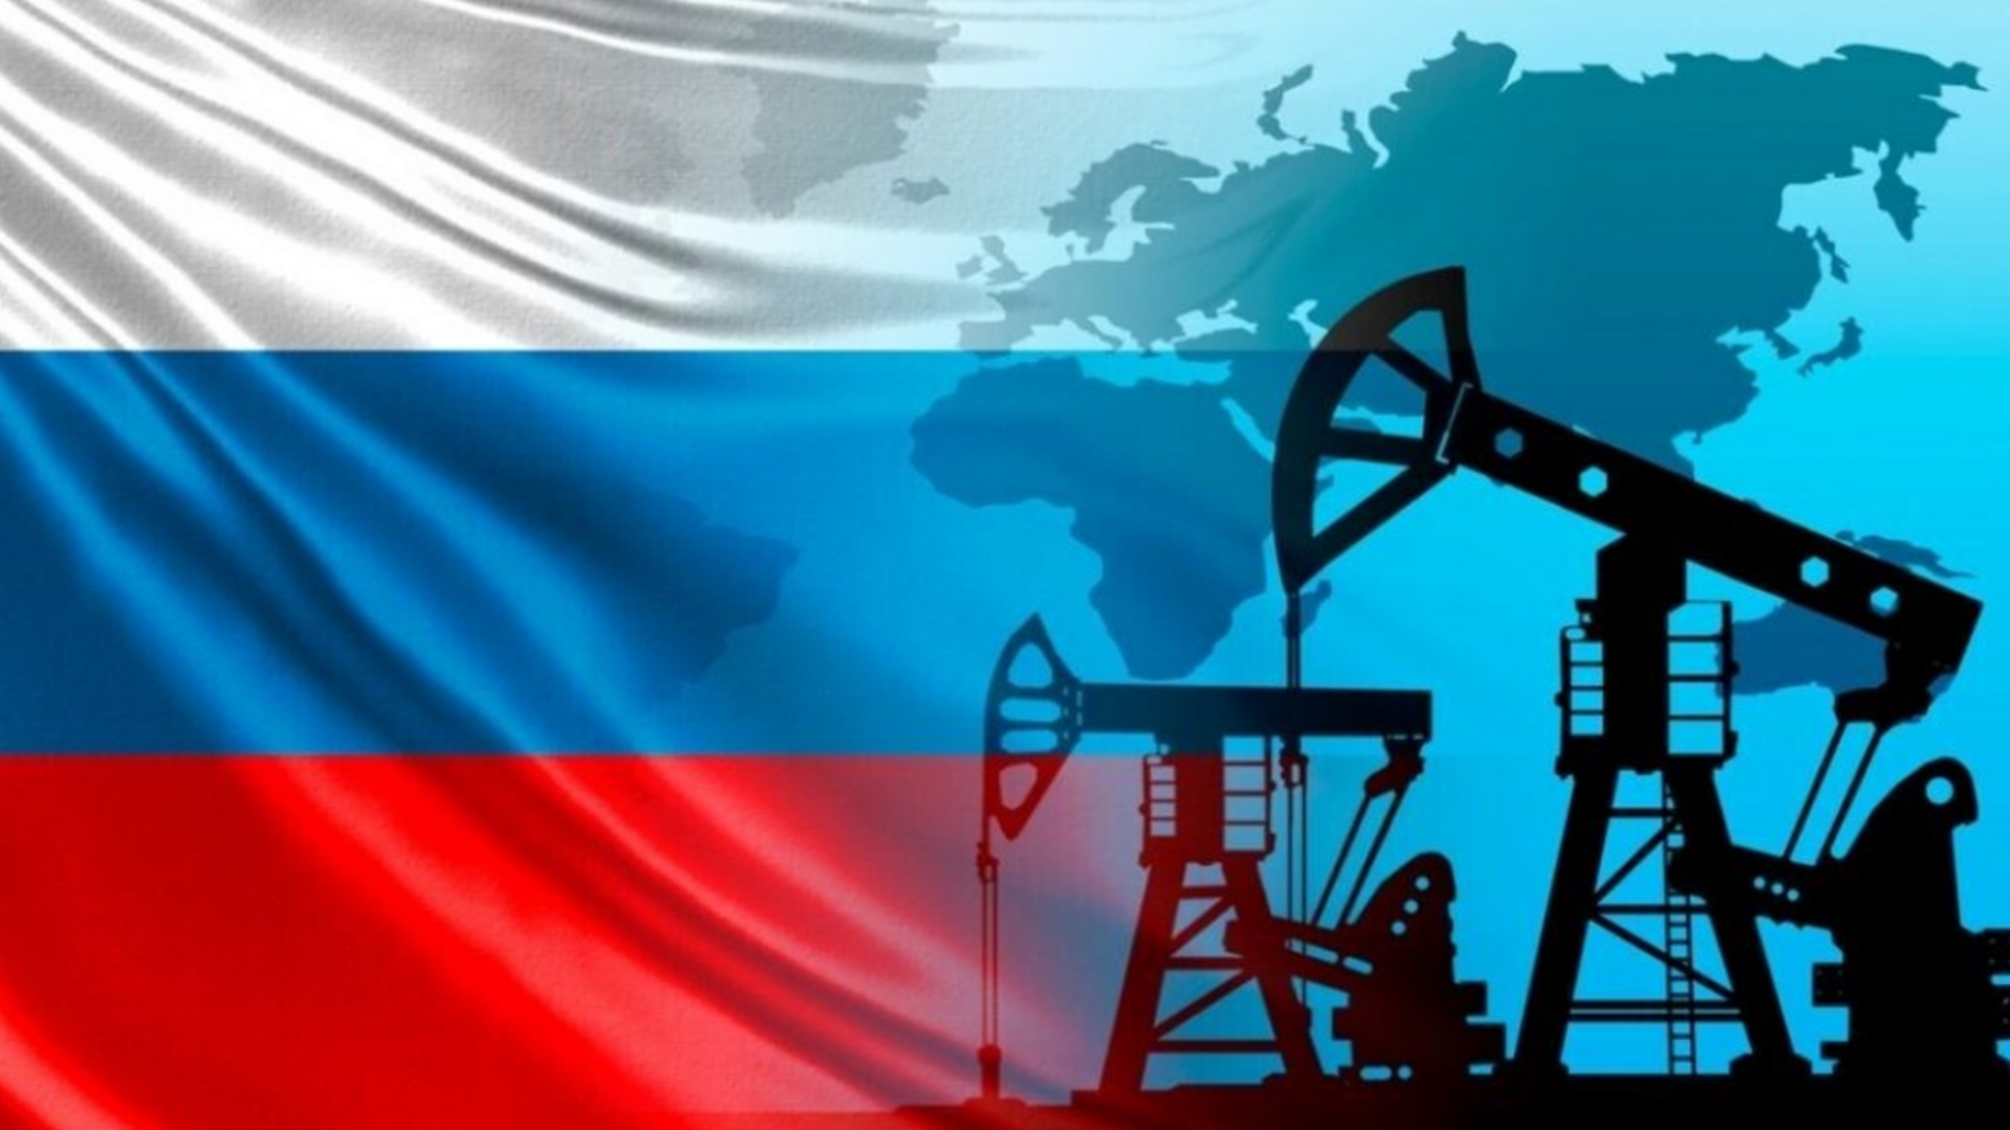 Ще одна країна закрила імпорт нафти з рф: хто не злякався погроз Кремля